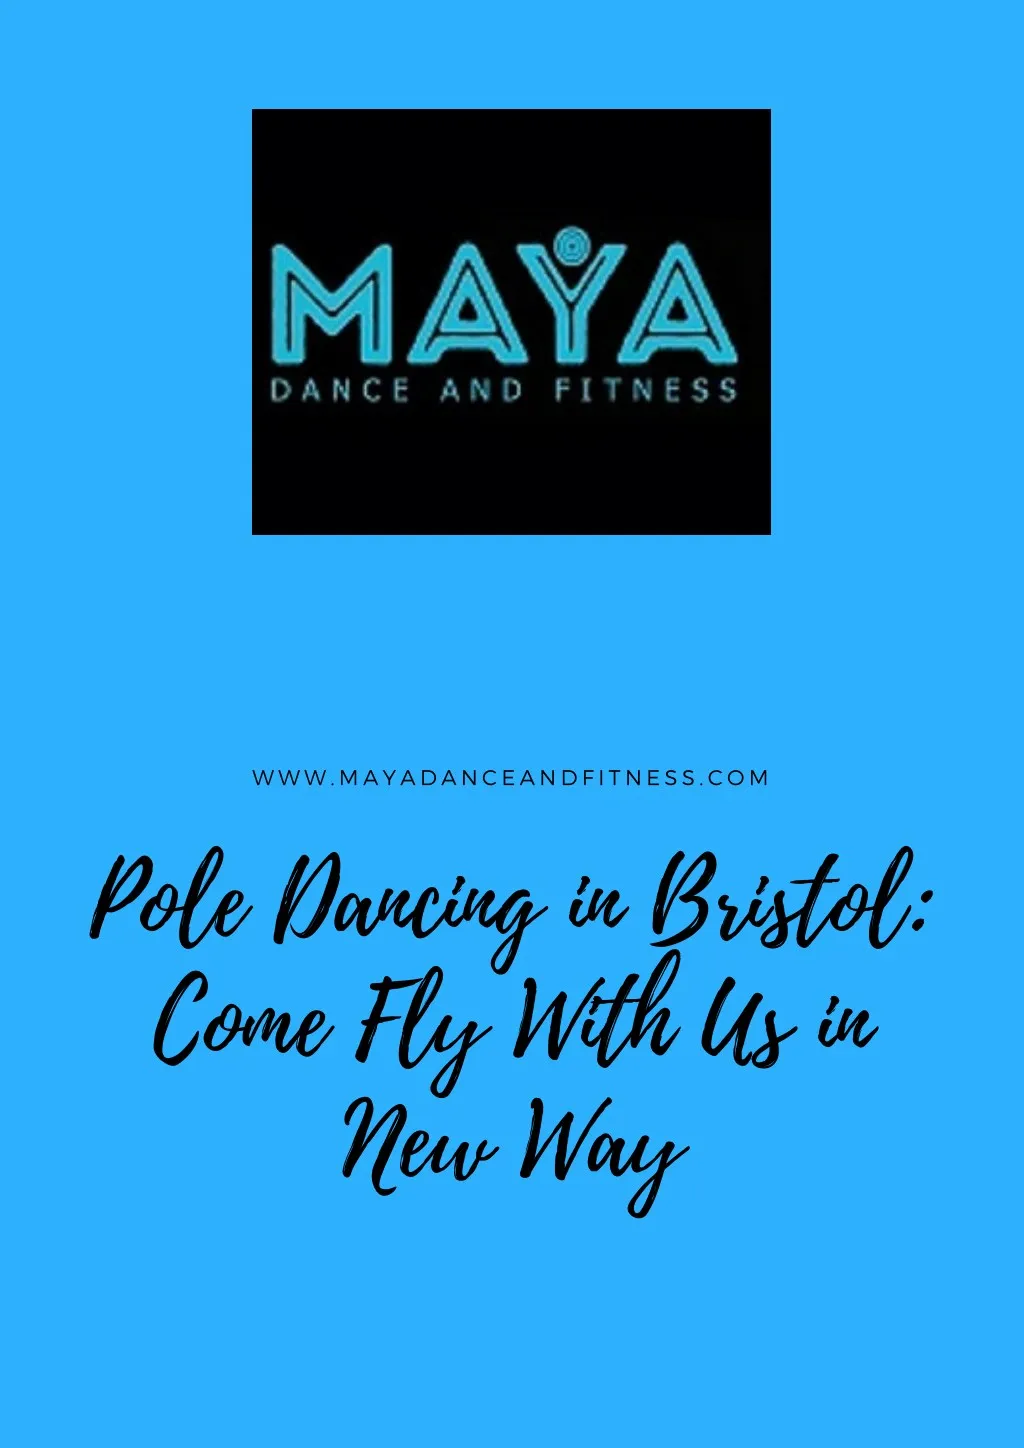 www mayadanceandfitness com pole dancing